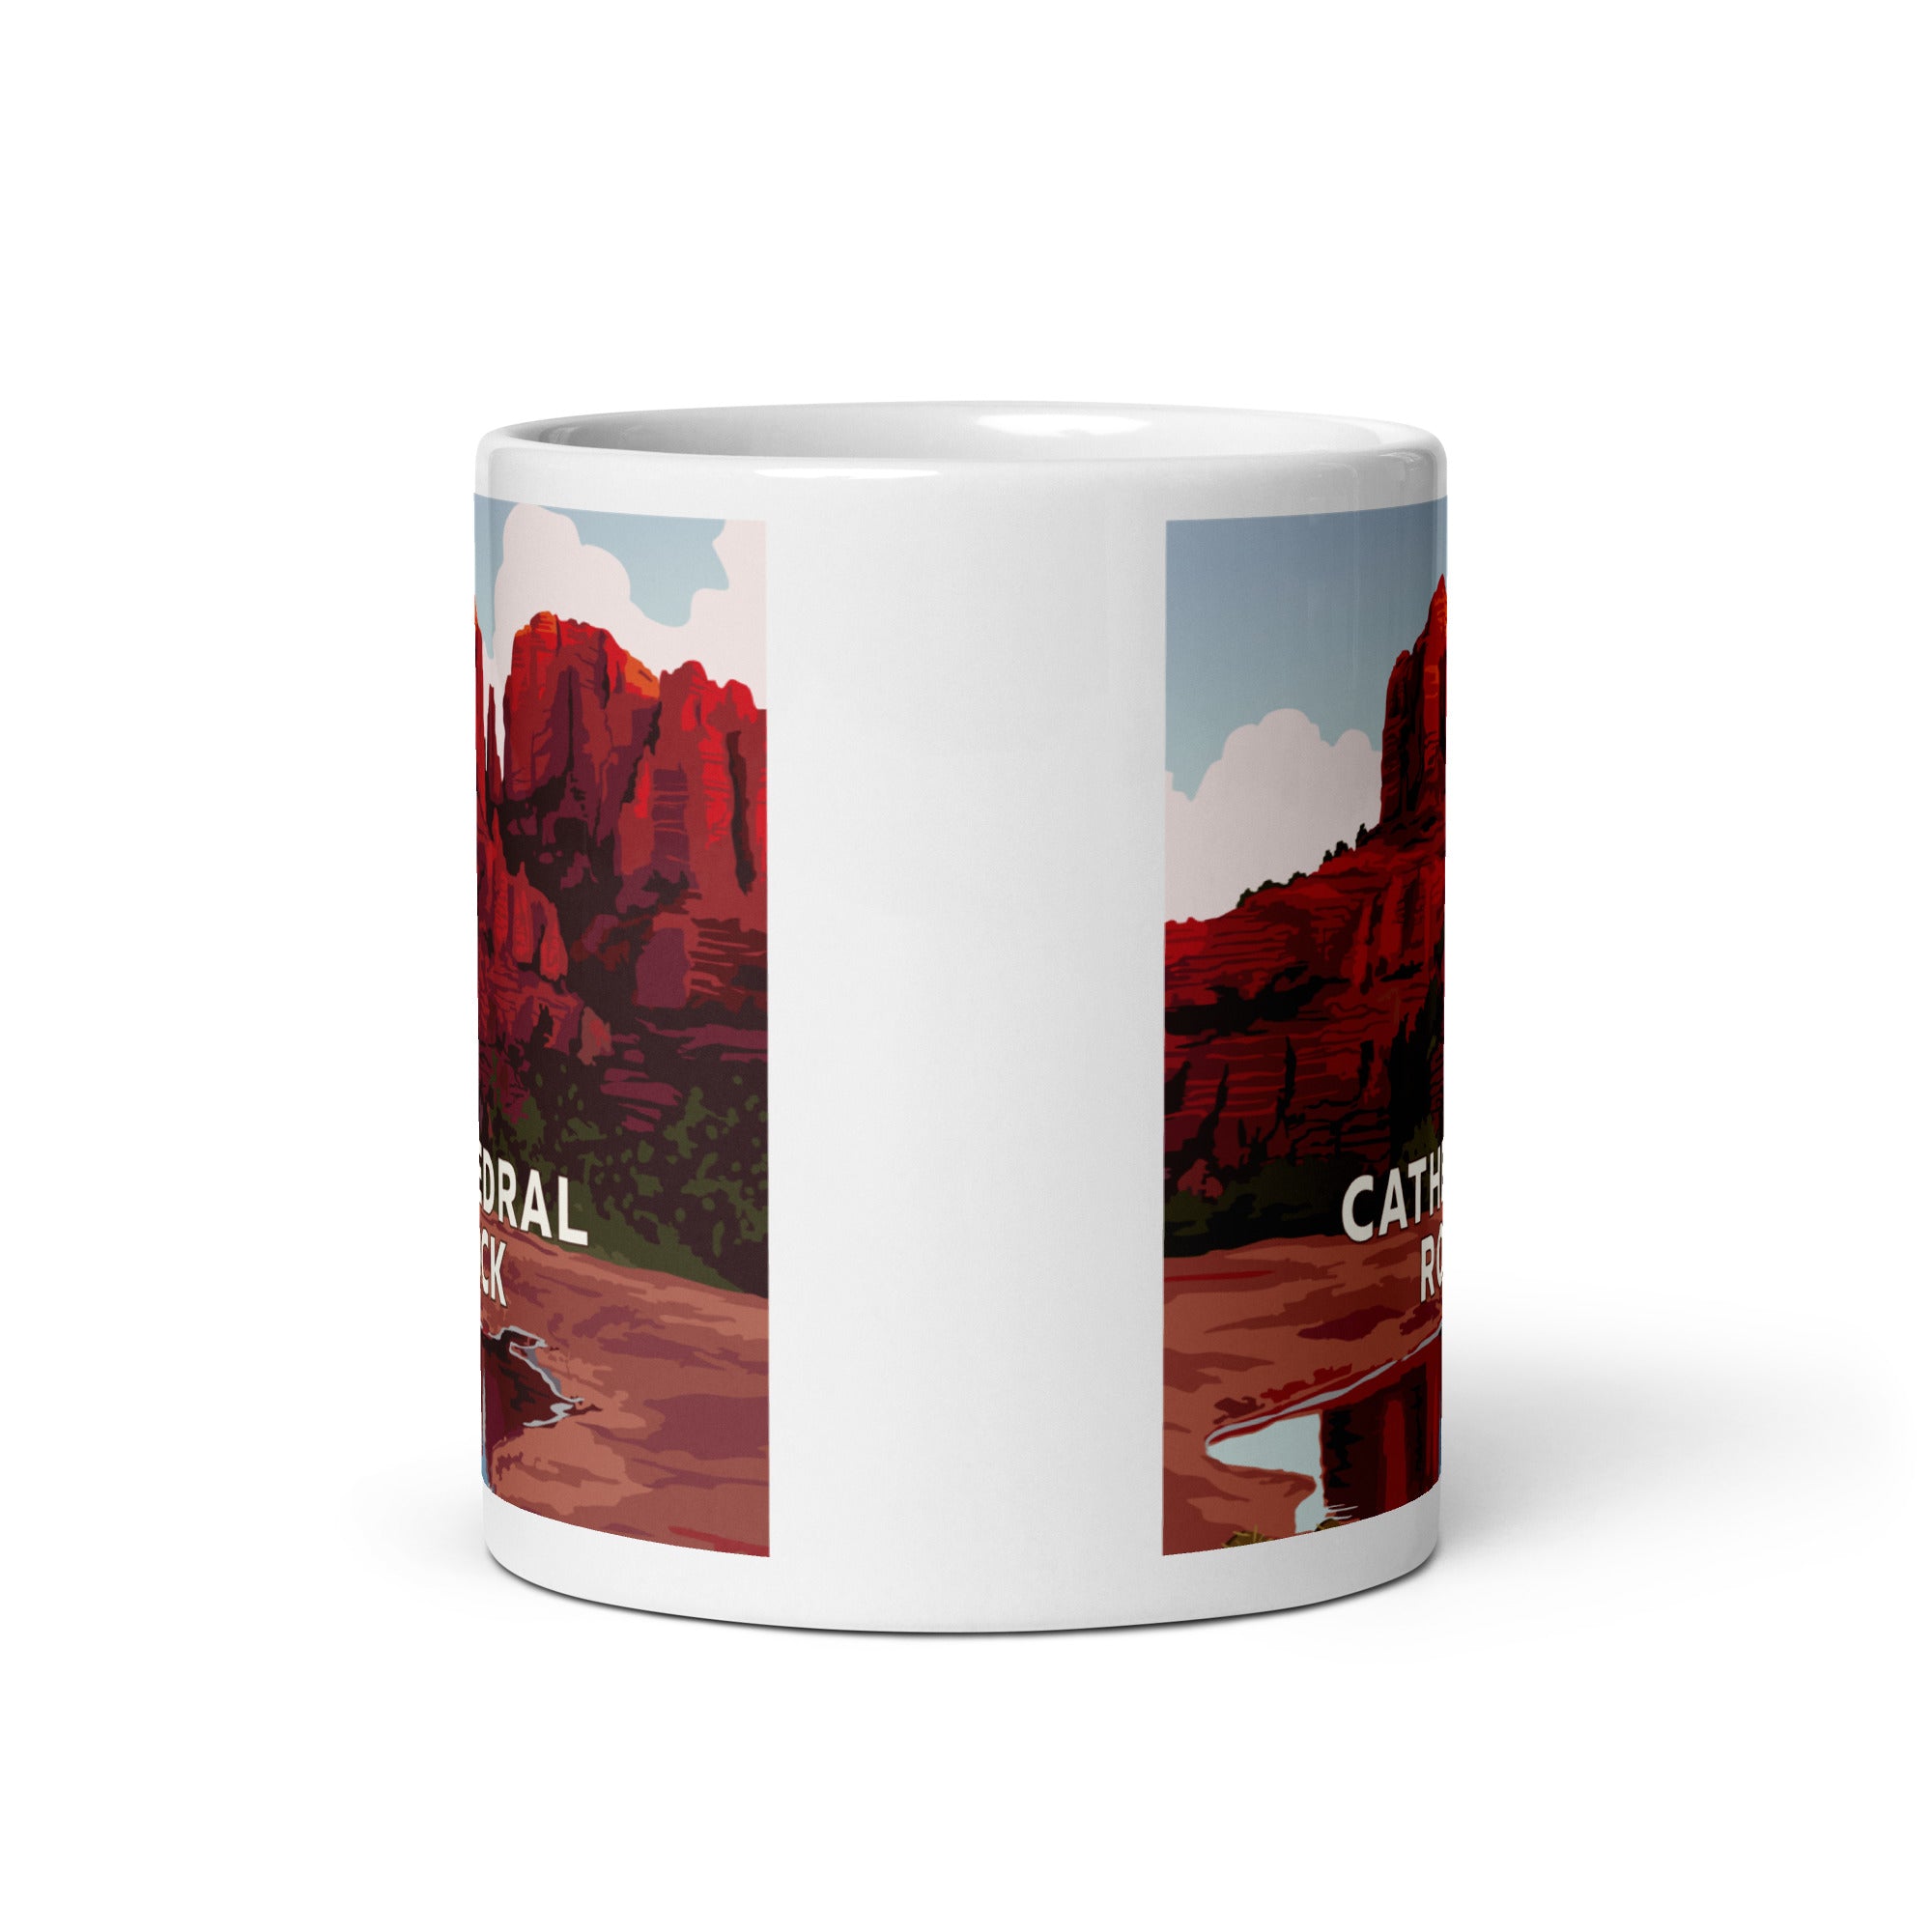 Landmark AZ | Cathedral Rock White glossy mug